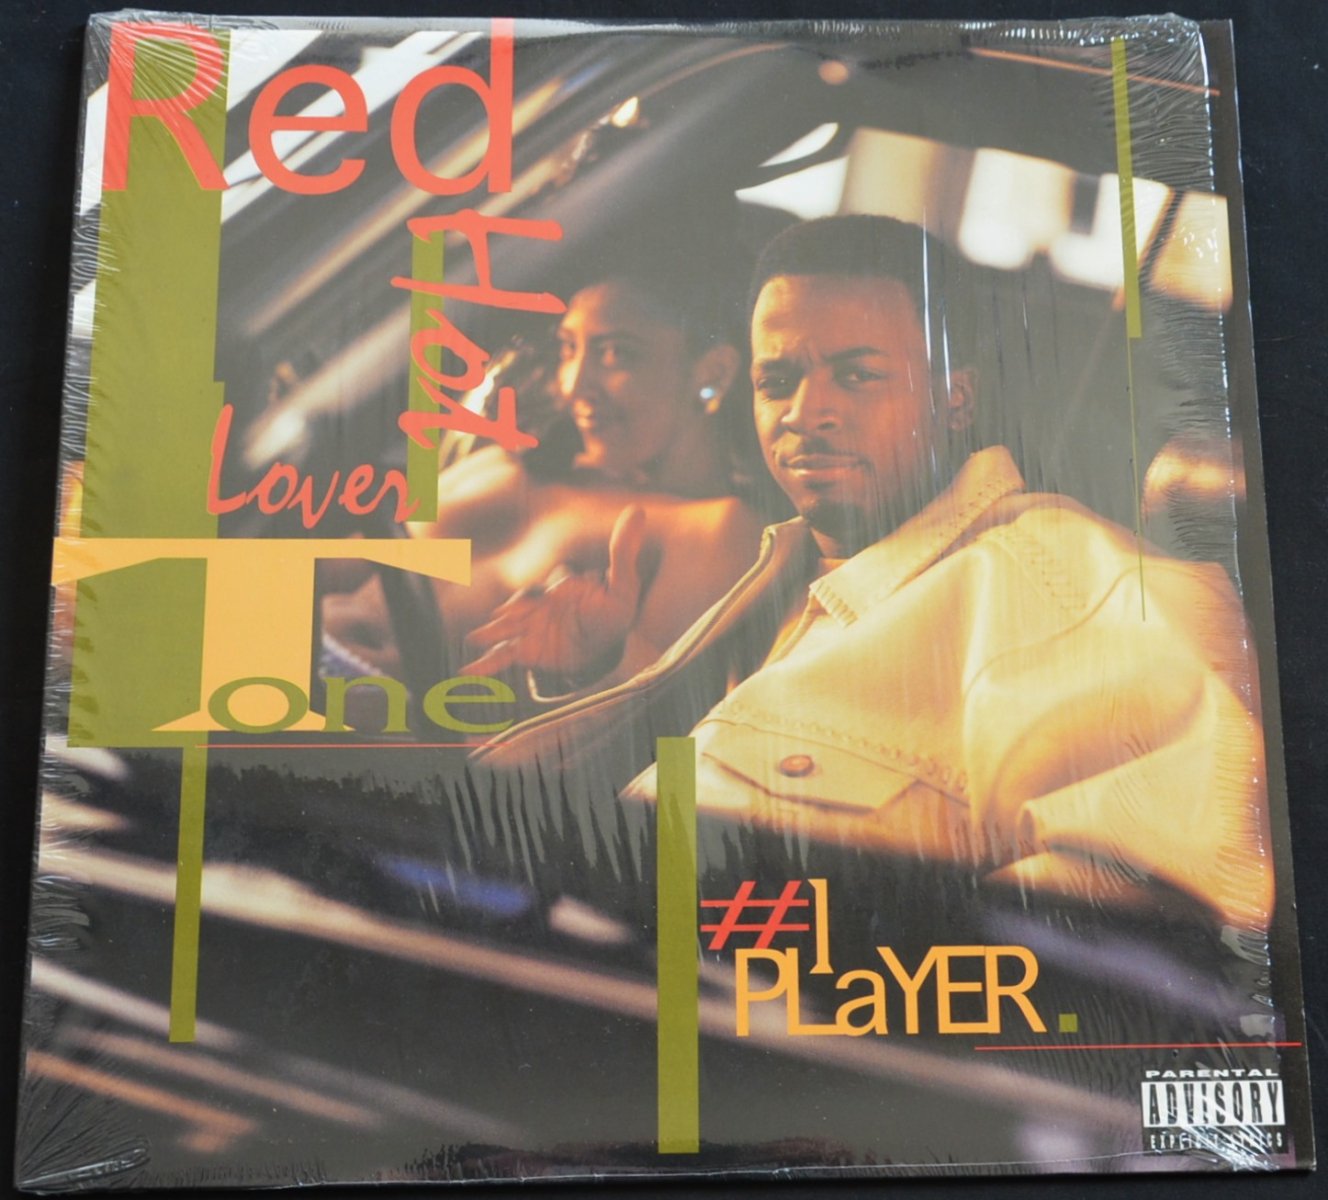 RED HOT LOVER TONE ‎/ #1 PLAYER (PROD BY DIAMOND D) / 98 (PROD BY BUCKWILD) (12